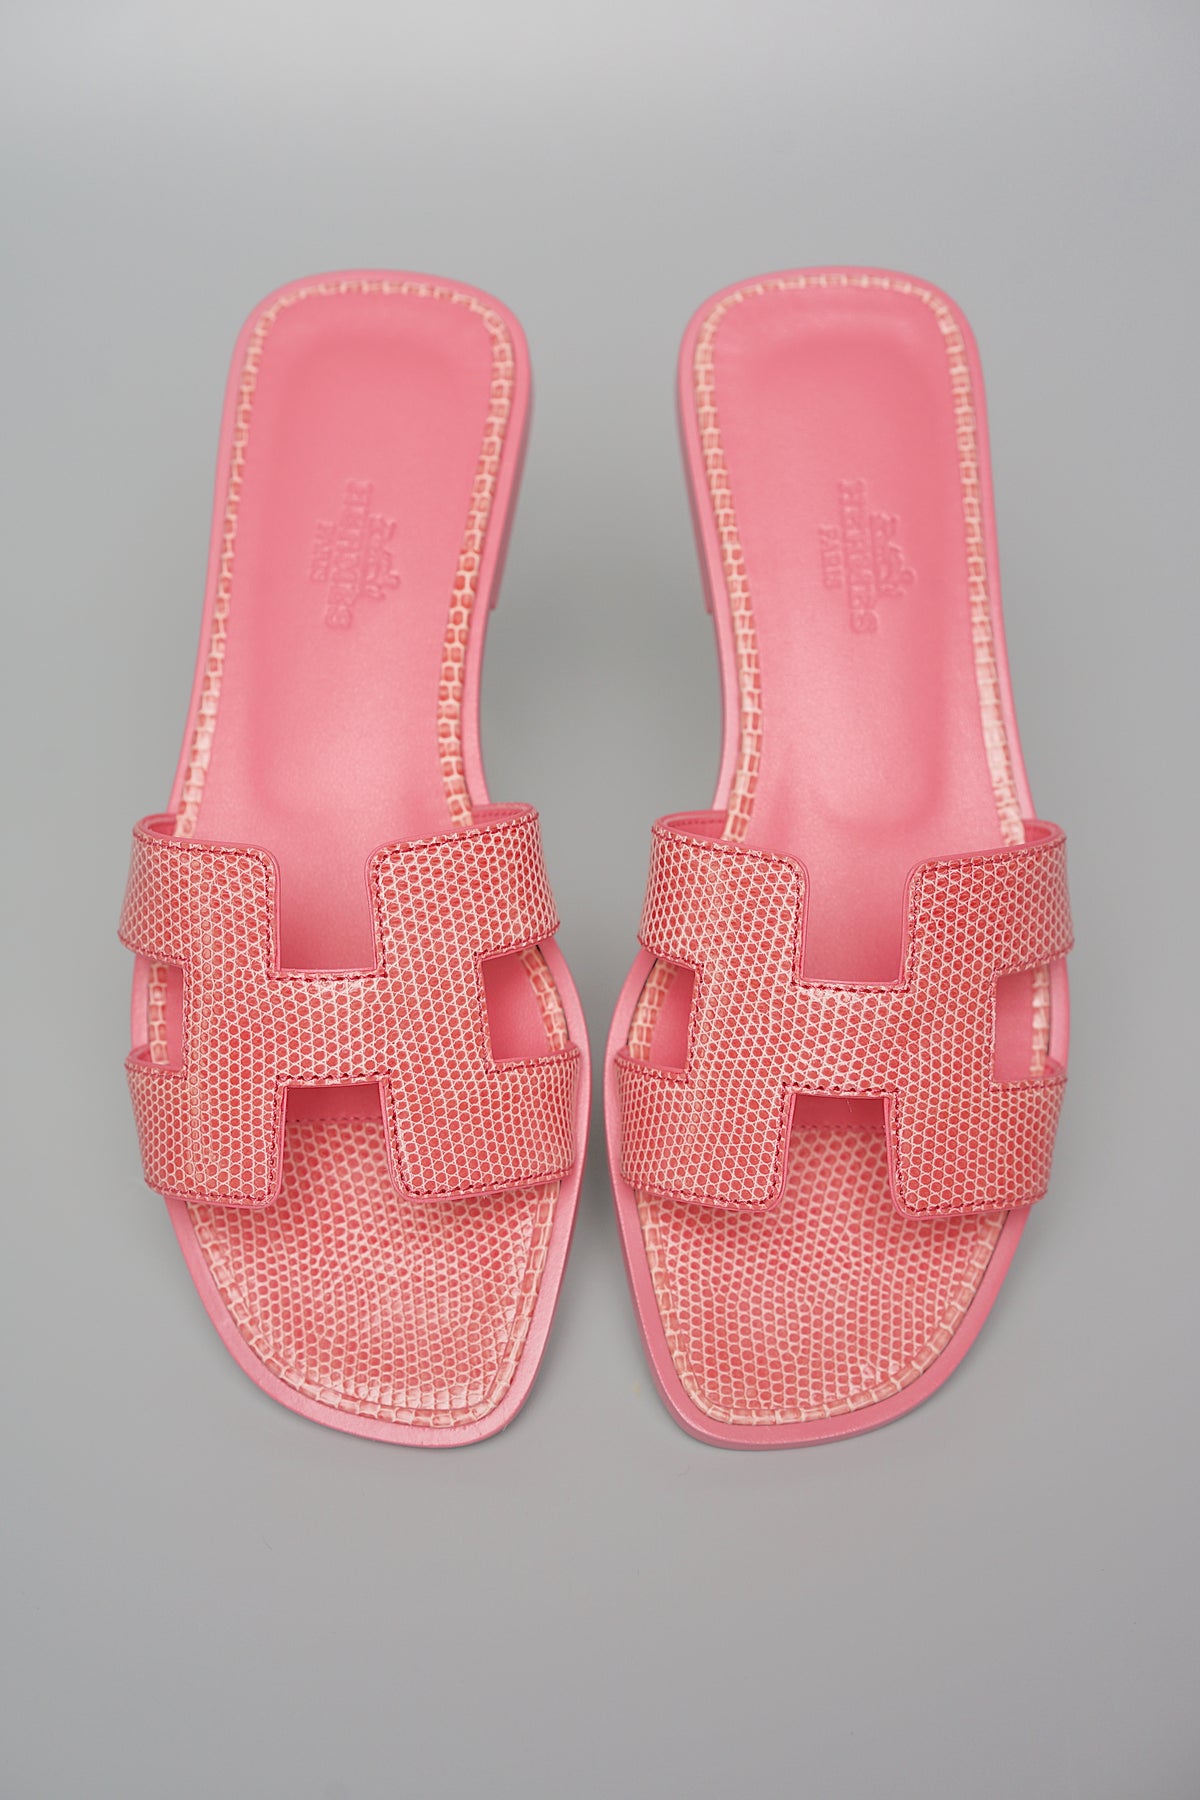 BNIB Hermes Oran Sandal Lizard In Rose Flash Pink Size 38